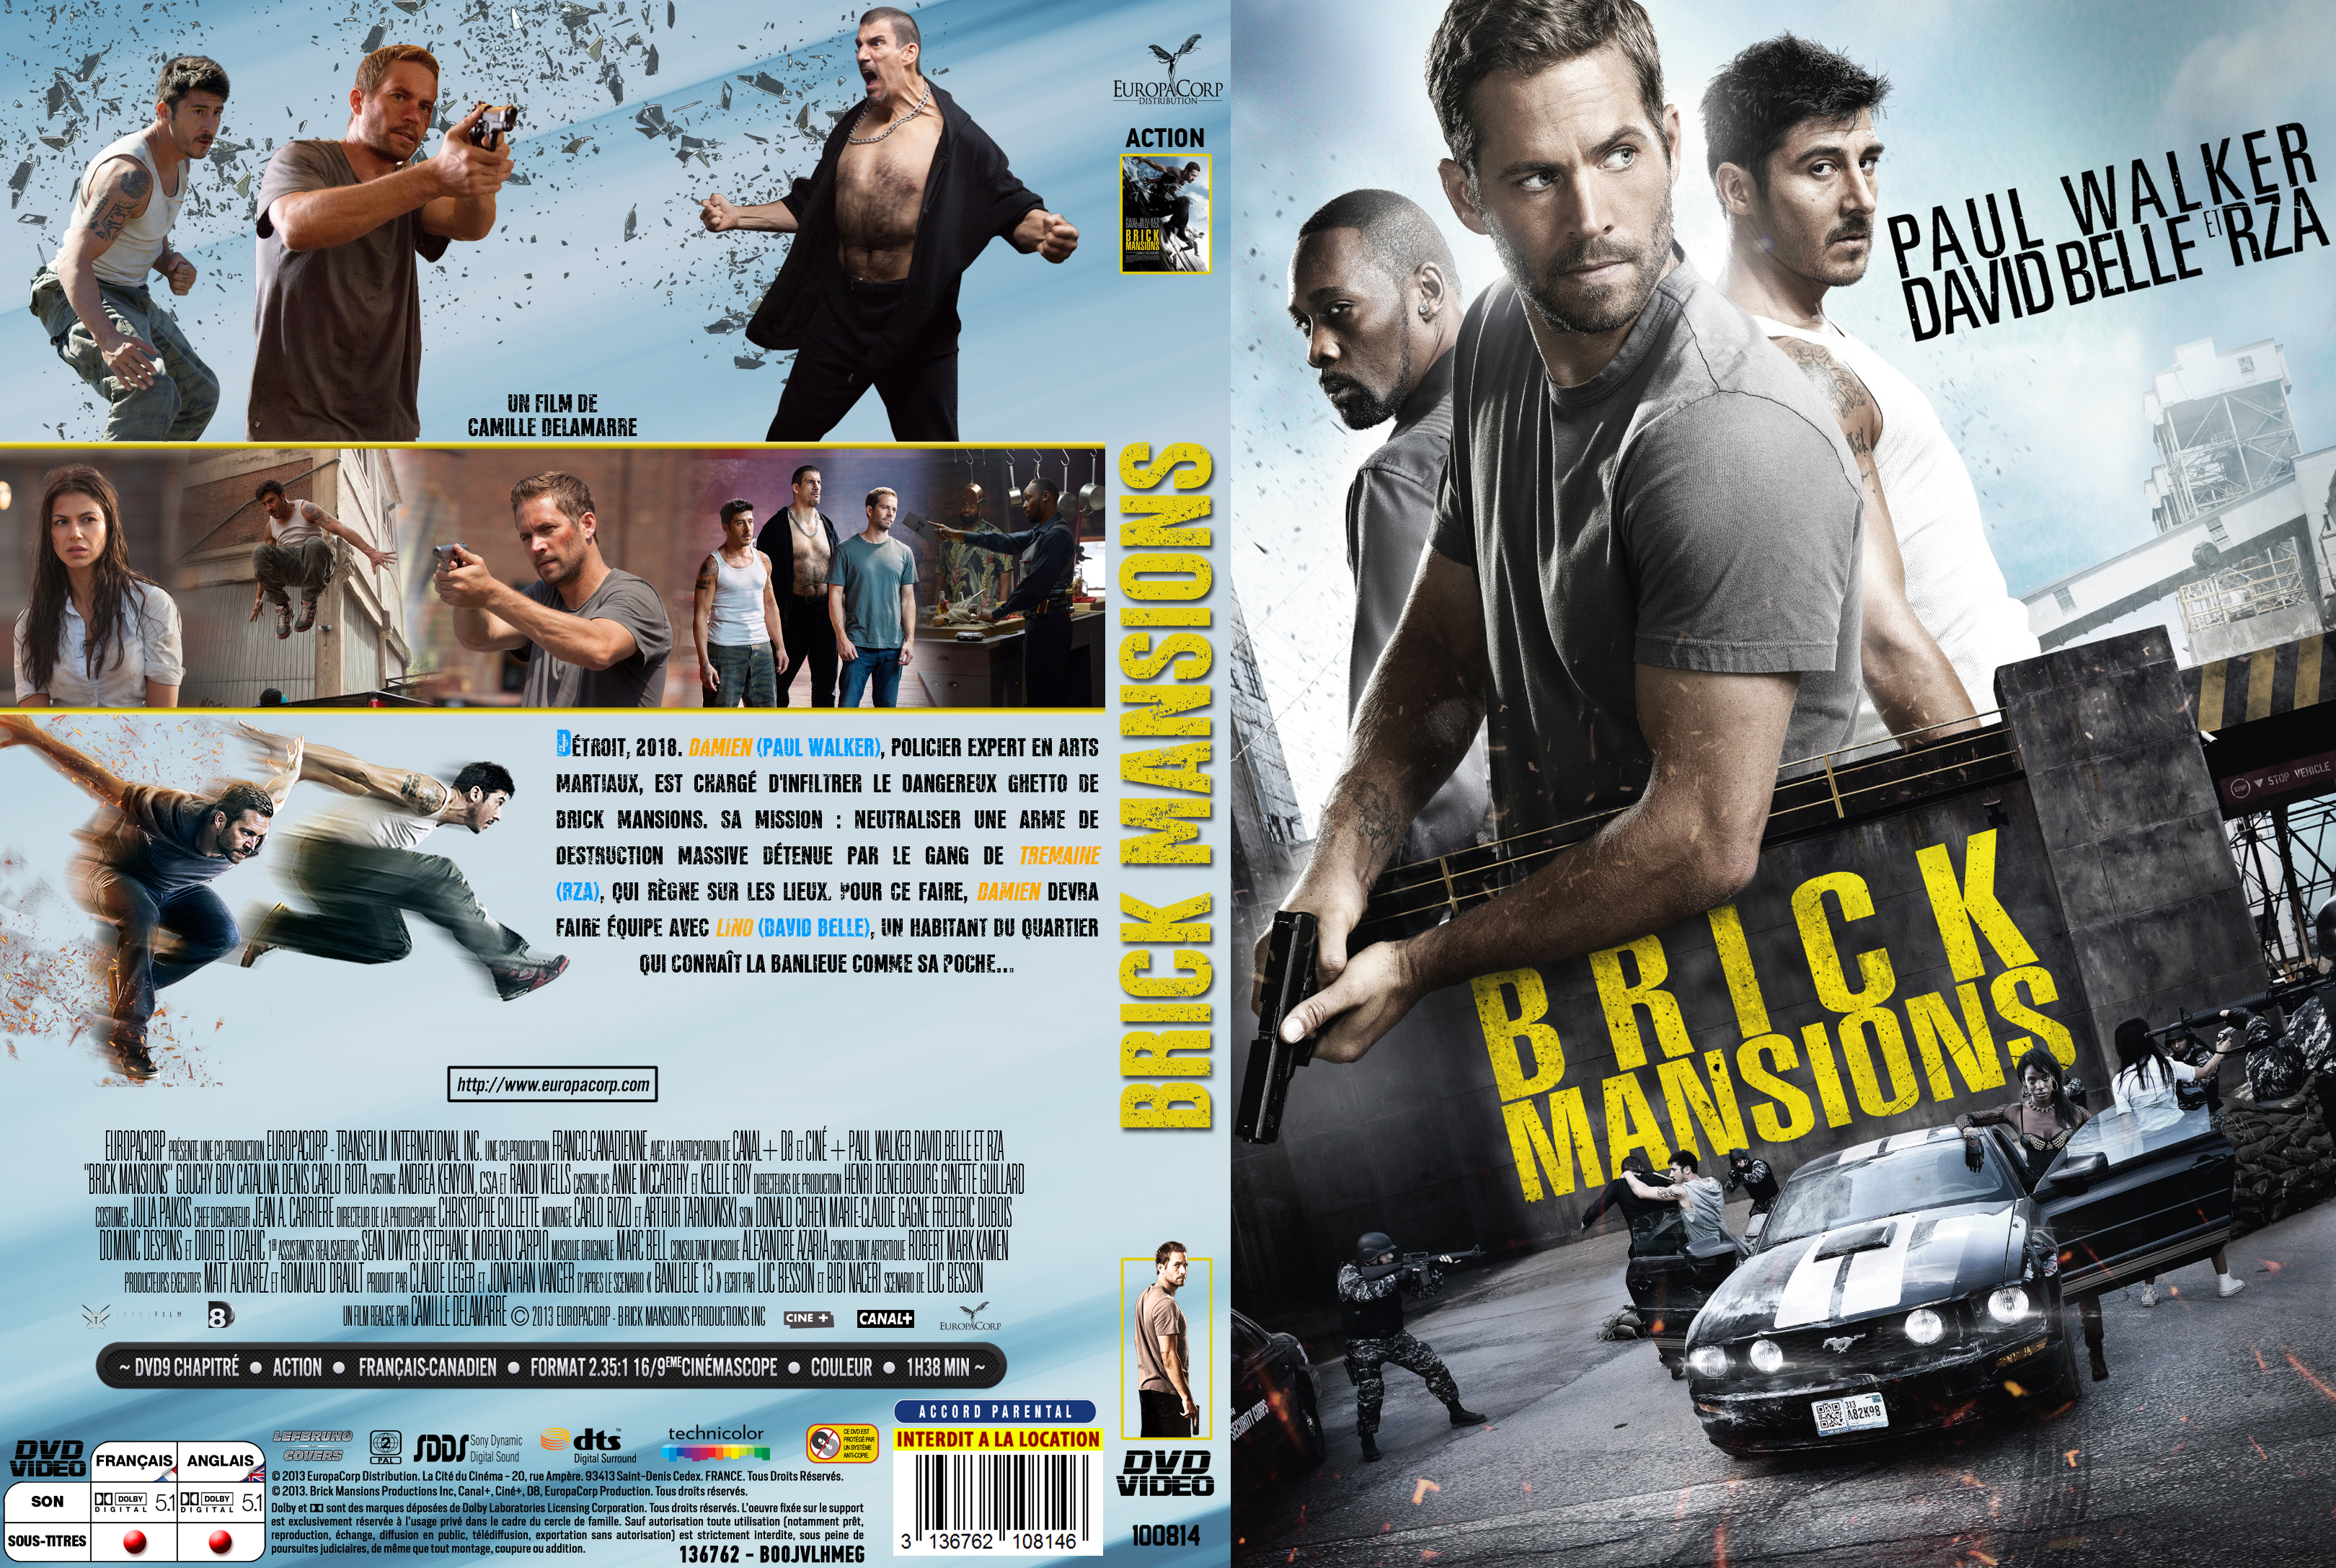 Jaquette DVD Brick Mansions custom